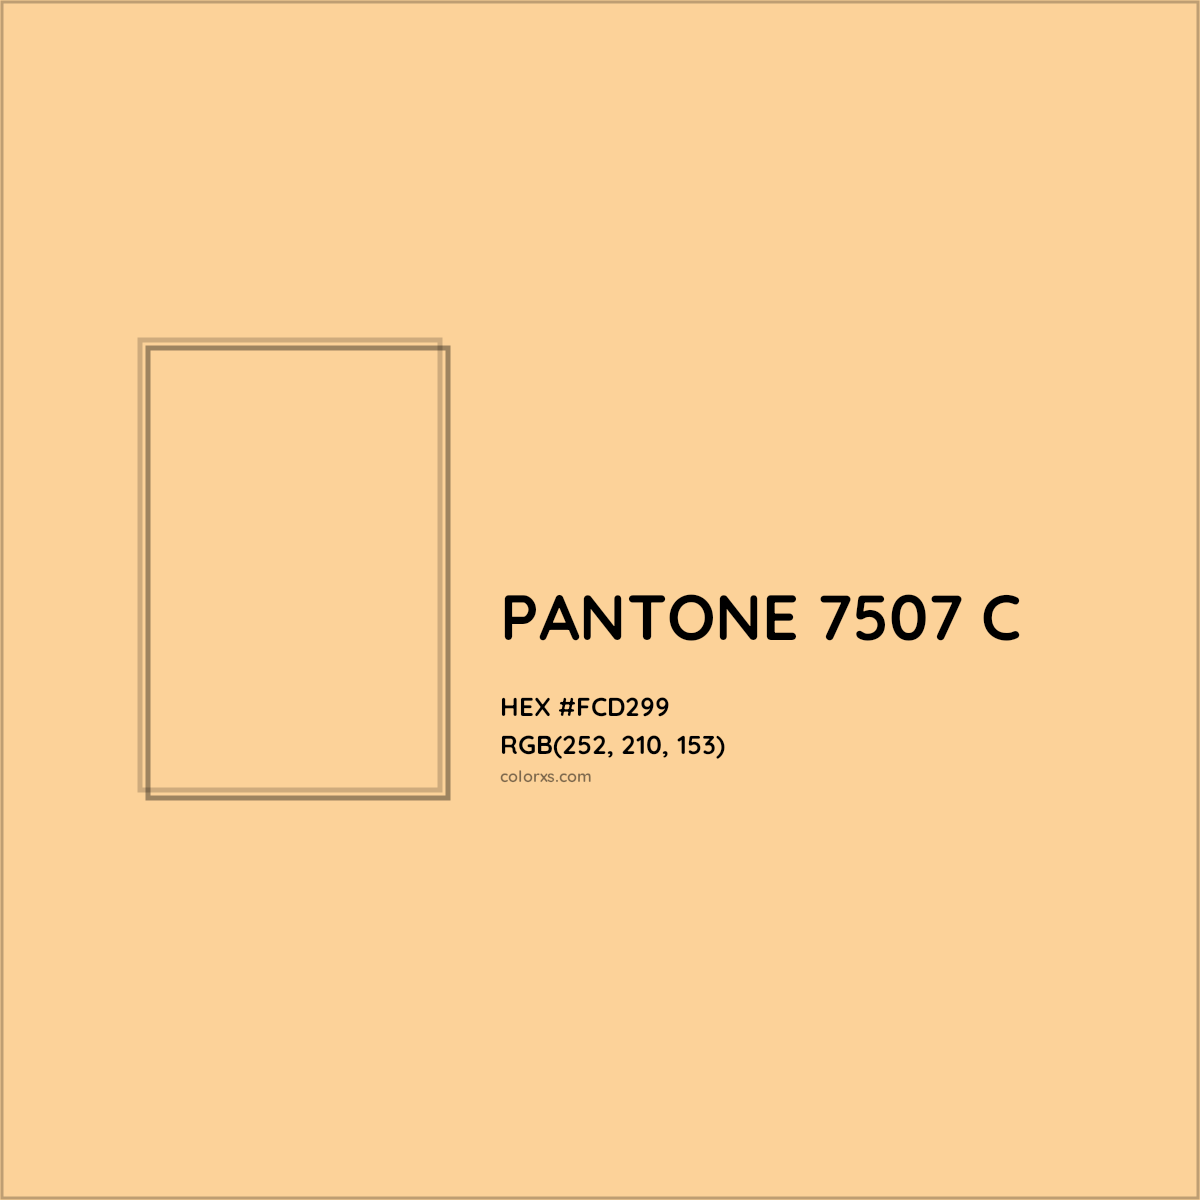 HEX #FCD299 PANTONE 7507 C CMS Pantone PMS - Color Code